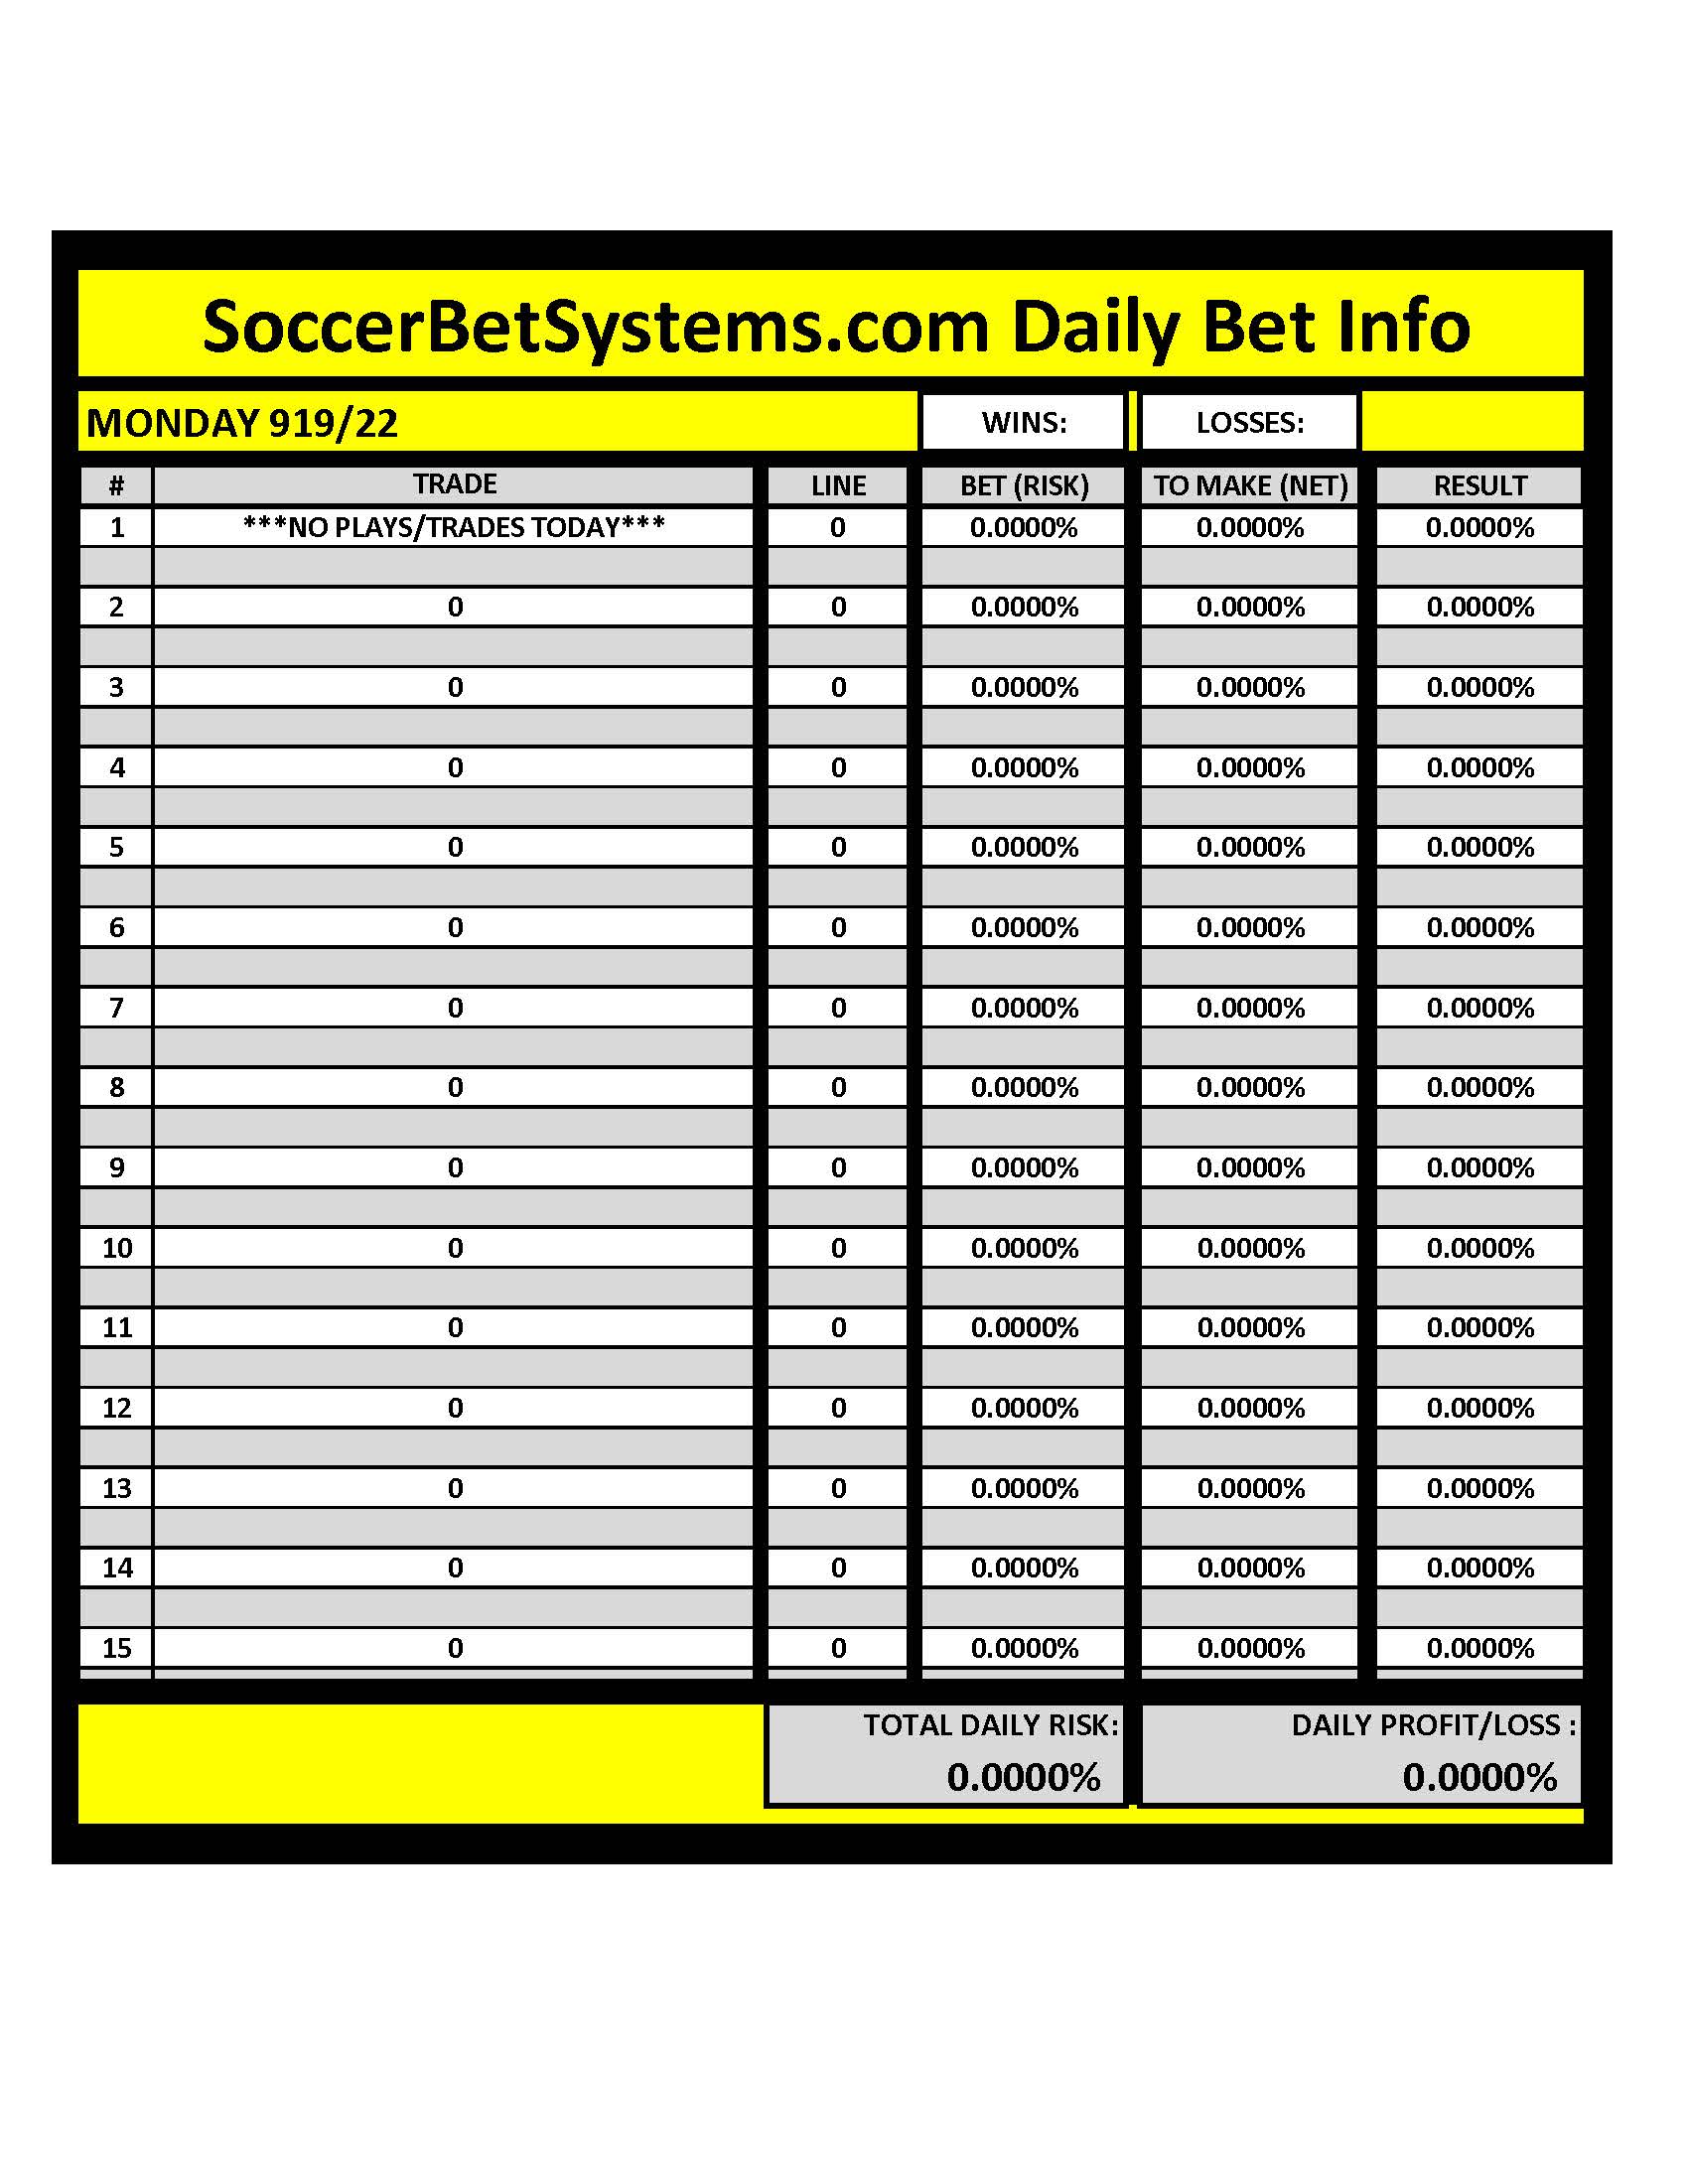 SoccerBetSystems.com 9/19/22 Daily Results